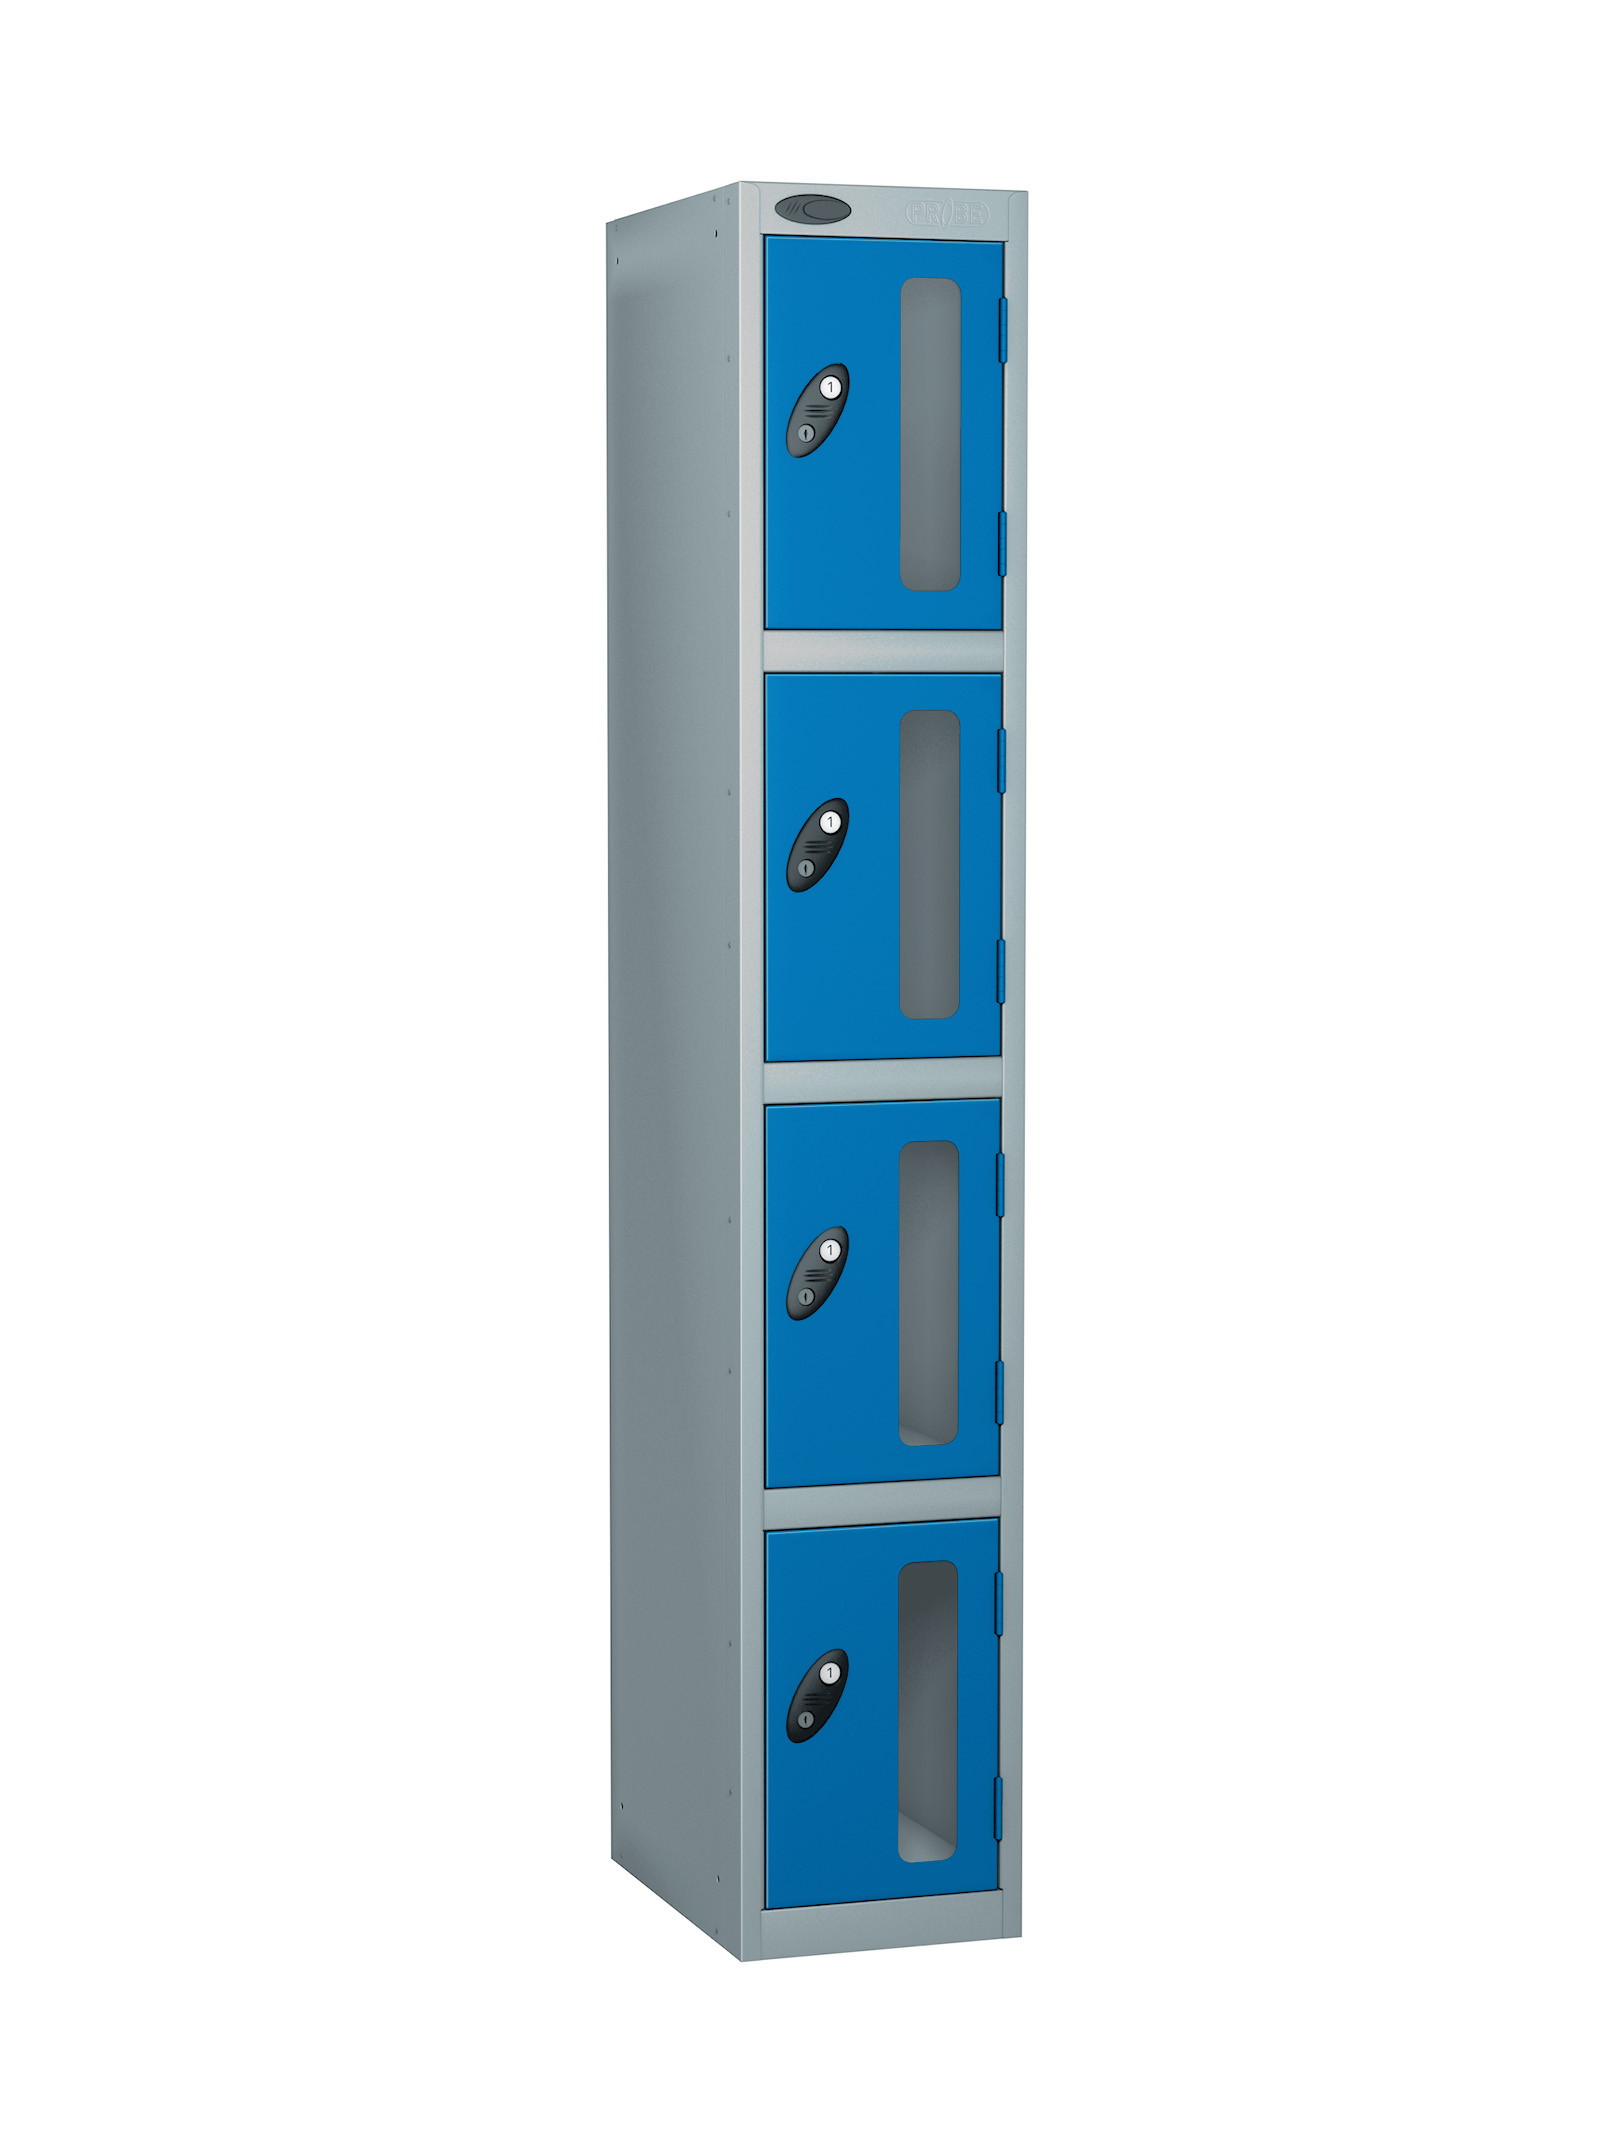 Probe 4 doors vision panel anti-stock theft locker blue